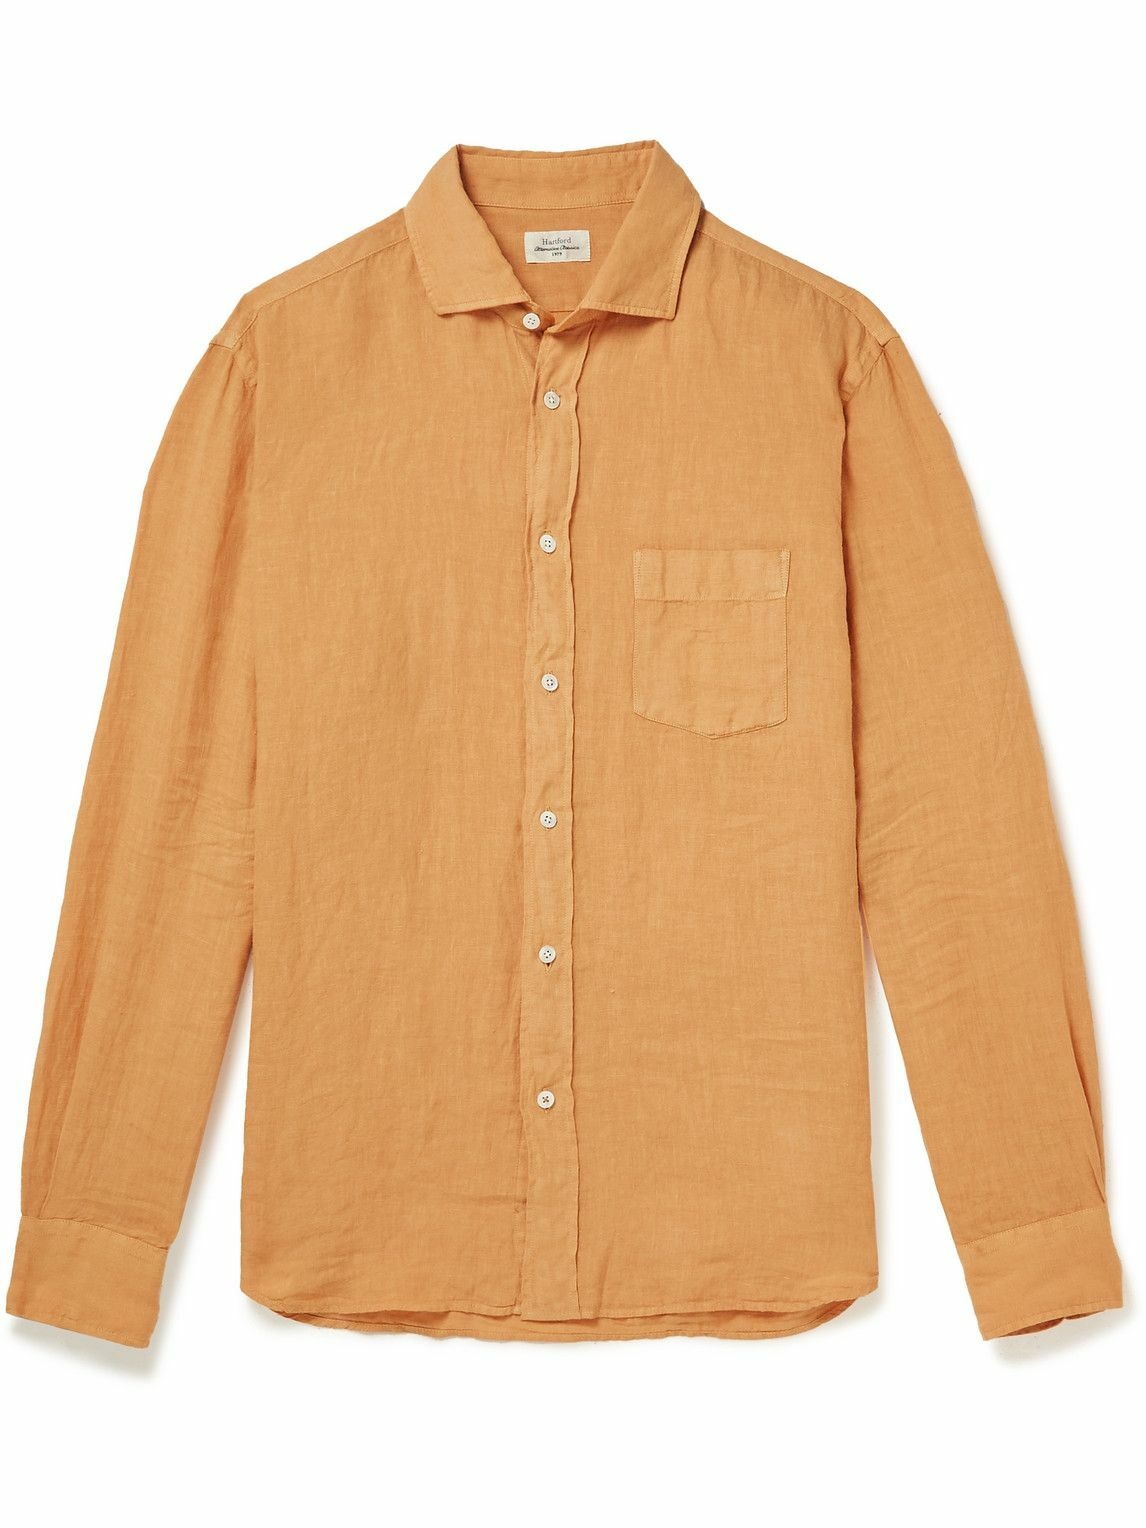 Hartford - Paul Pat Linen Shirt - Orange Hartford